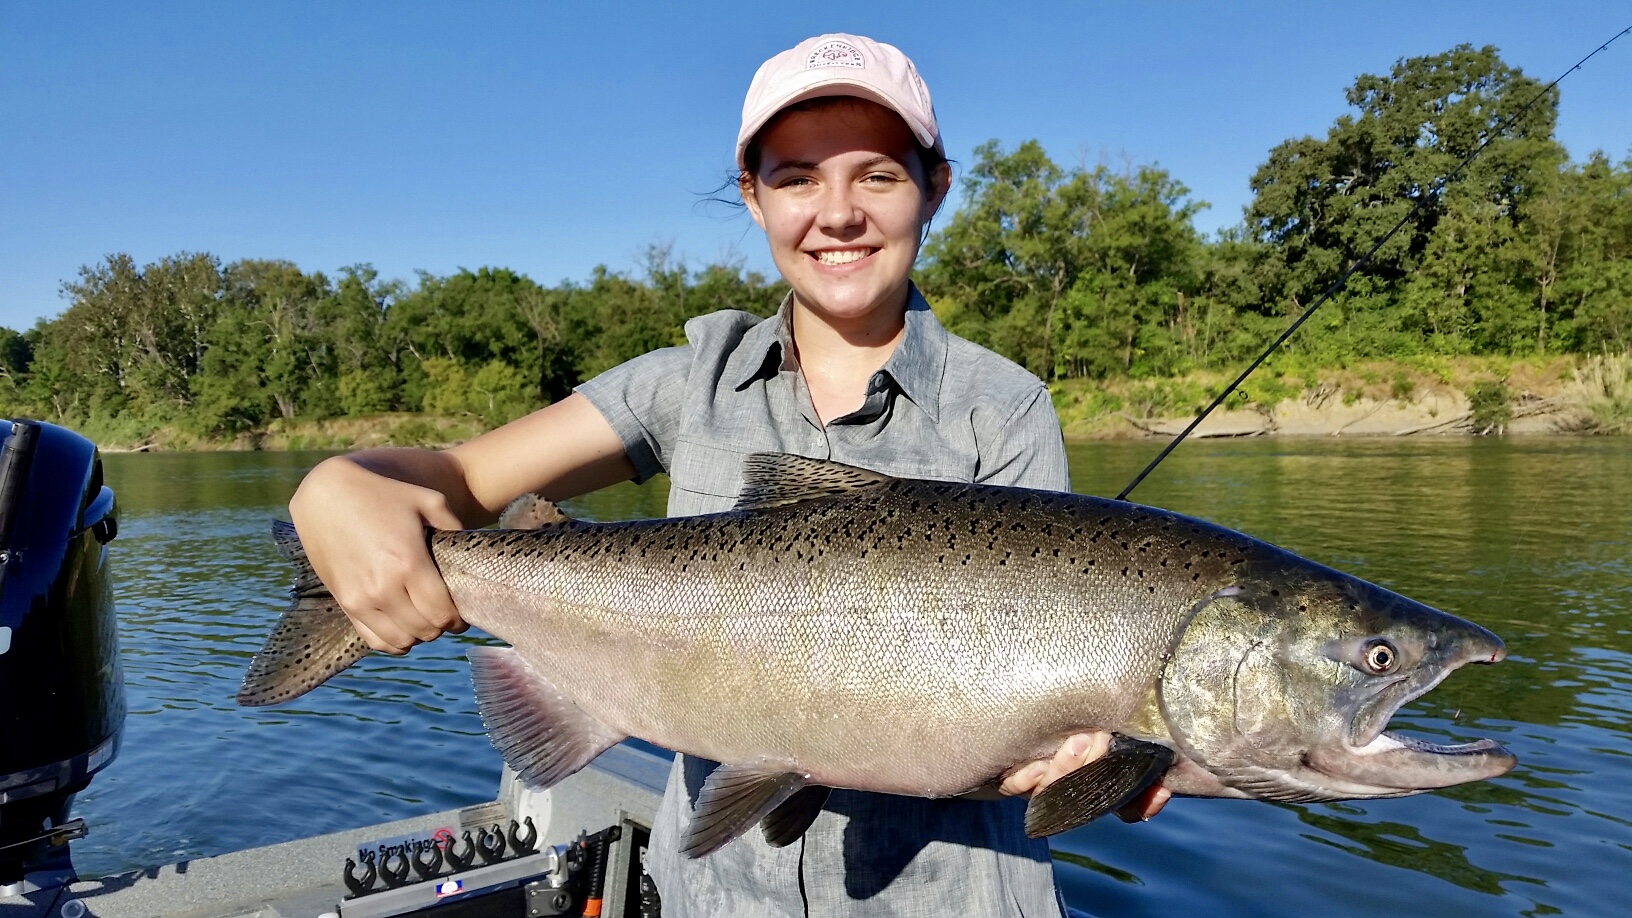 Sac River salmon fishing heats up!